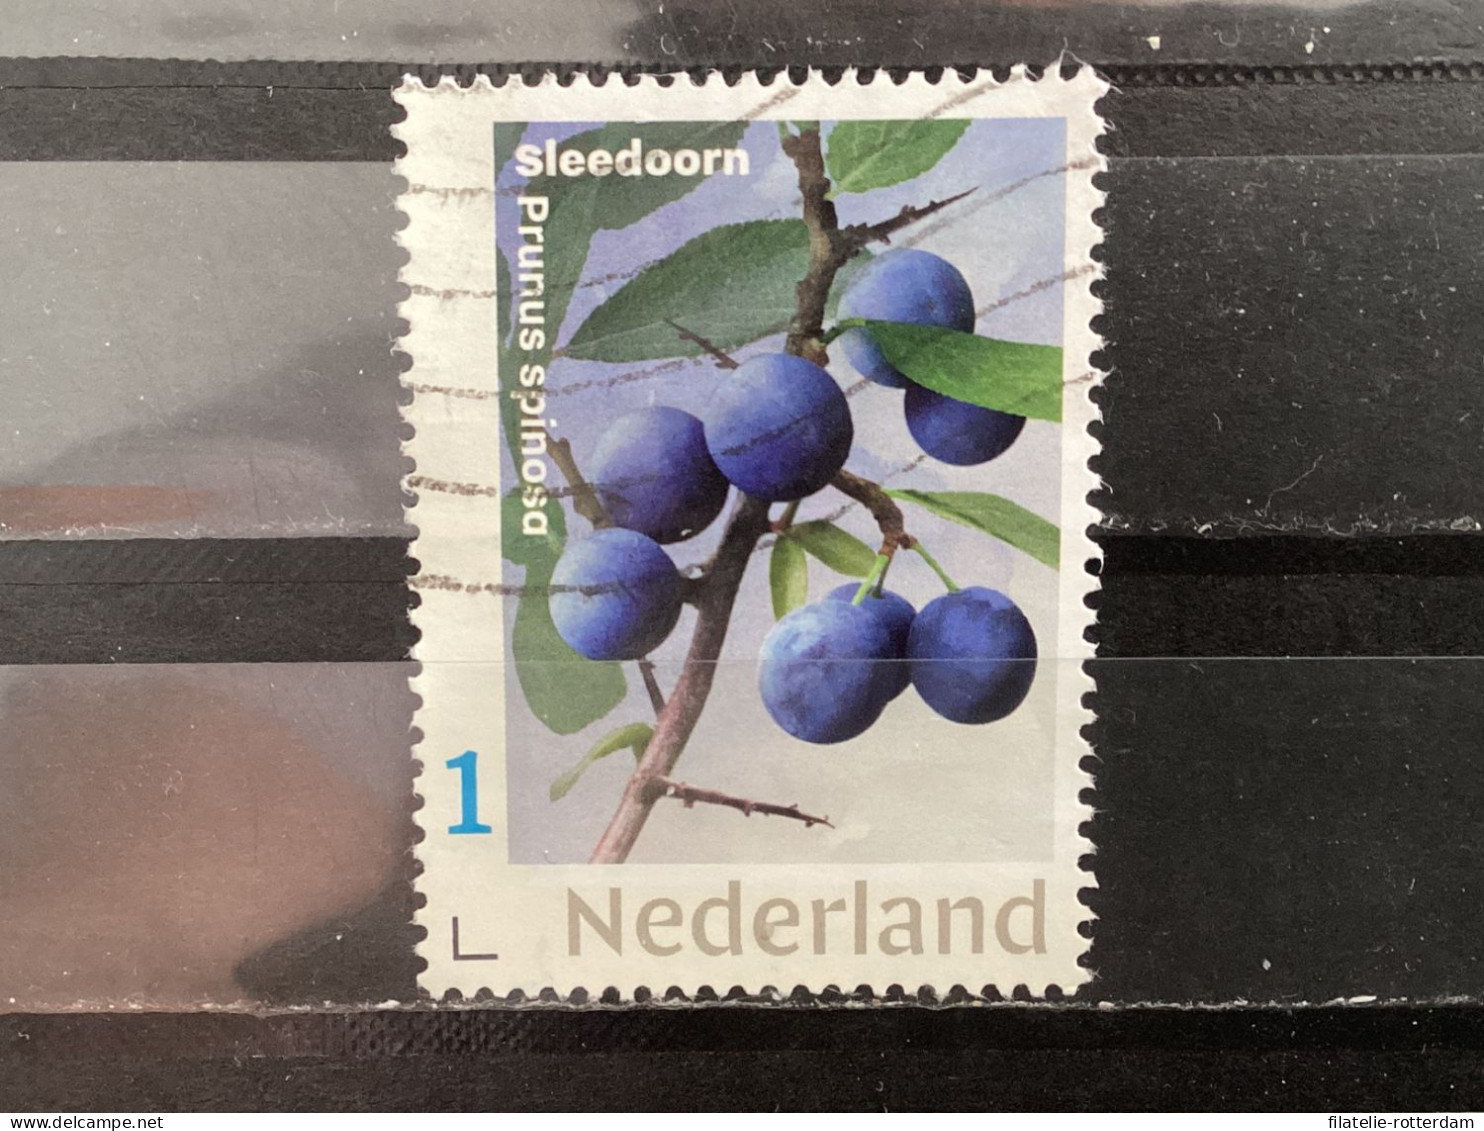 The Netherlands / Nederland - Fruit, Sleedoorn 2021 - Usados